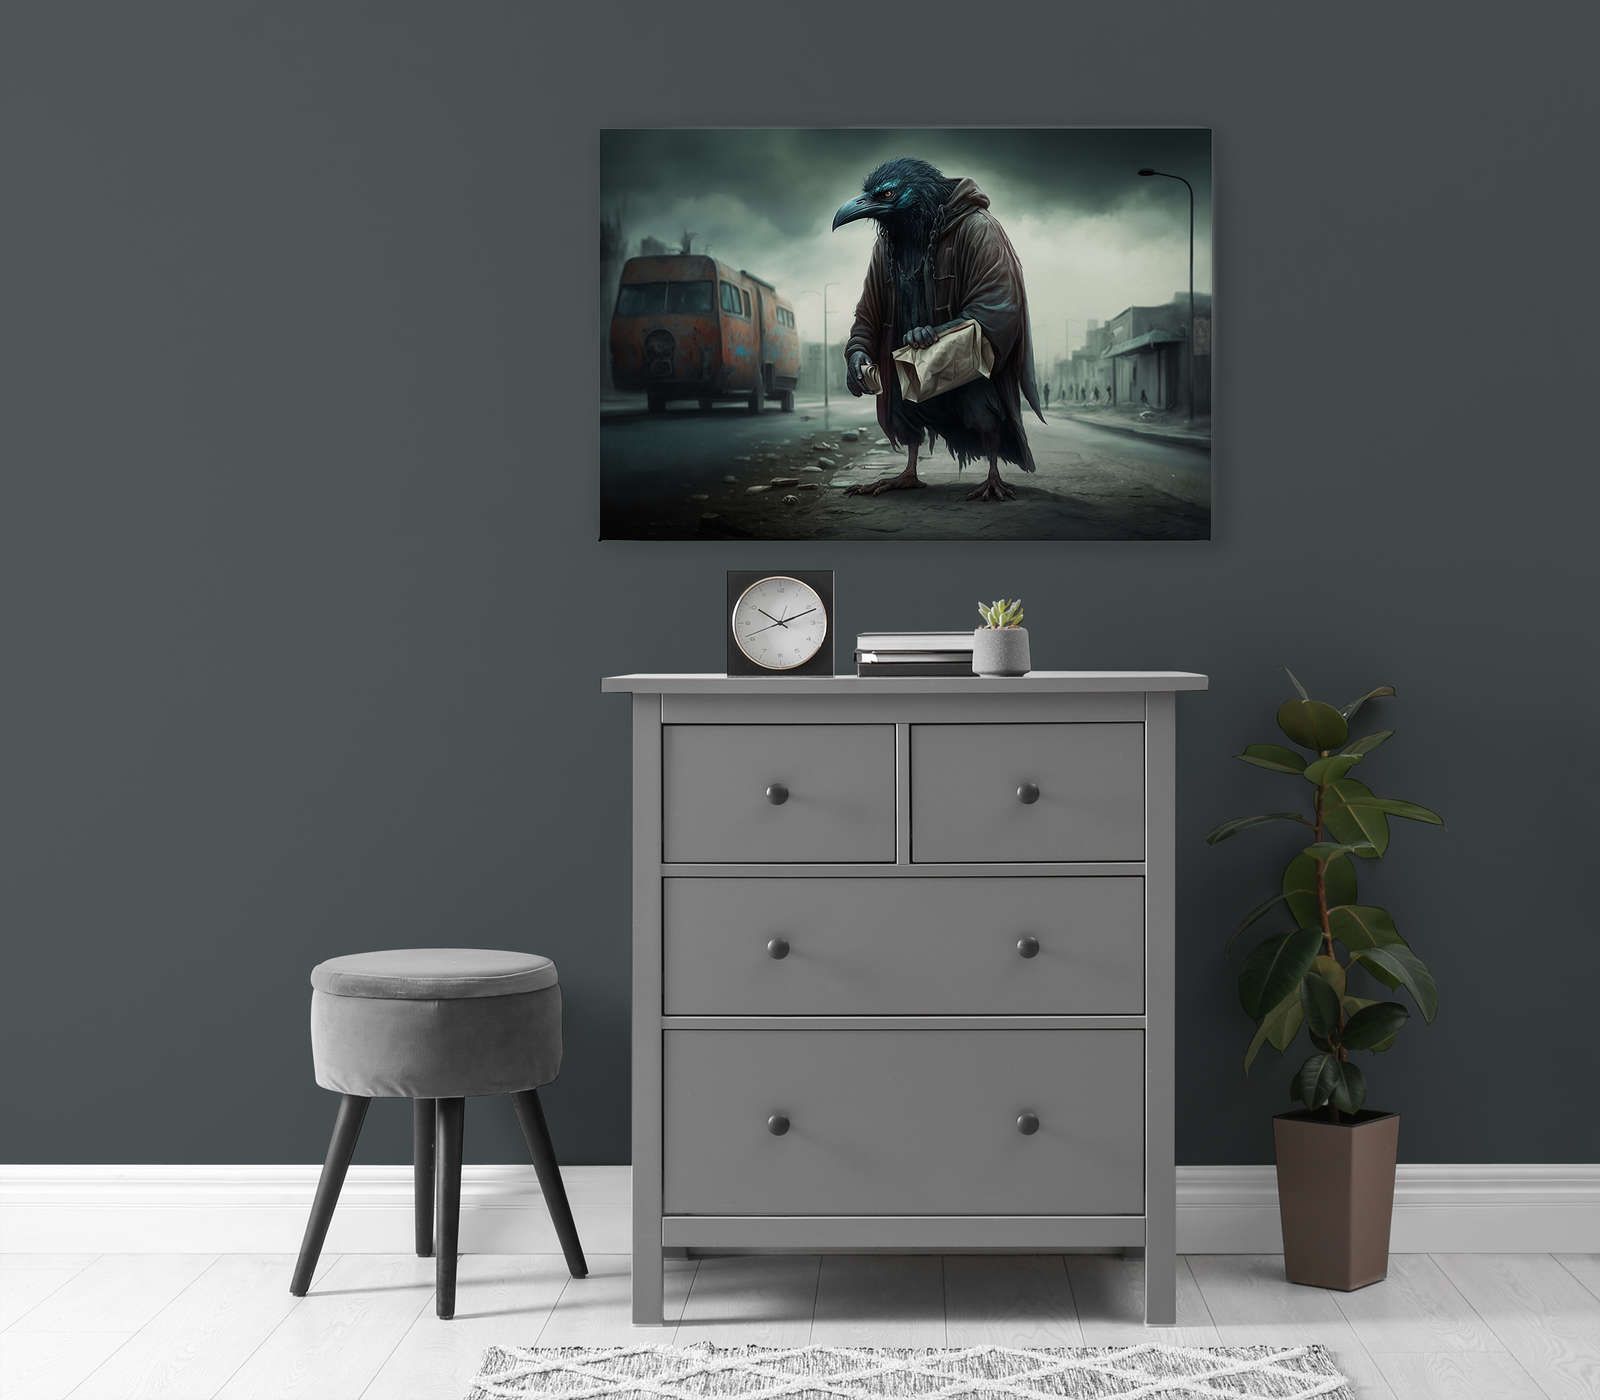             KI-Leinwandbild »Street Crow« – 90 cm x 60 cm
        